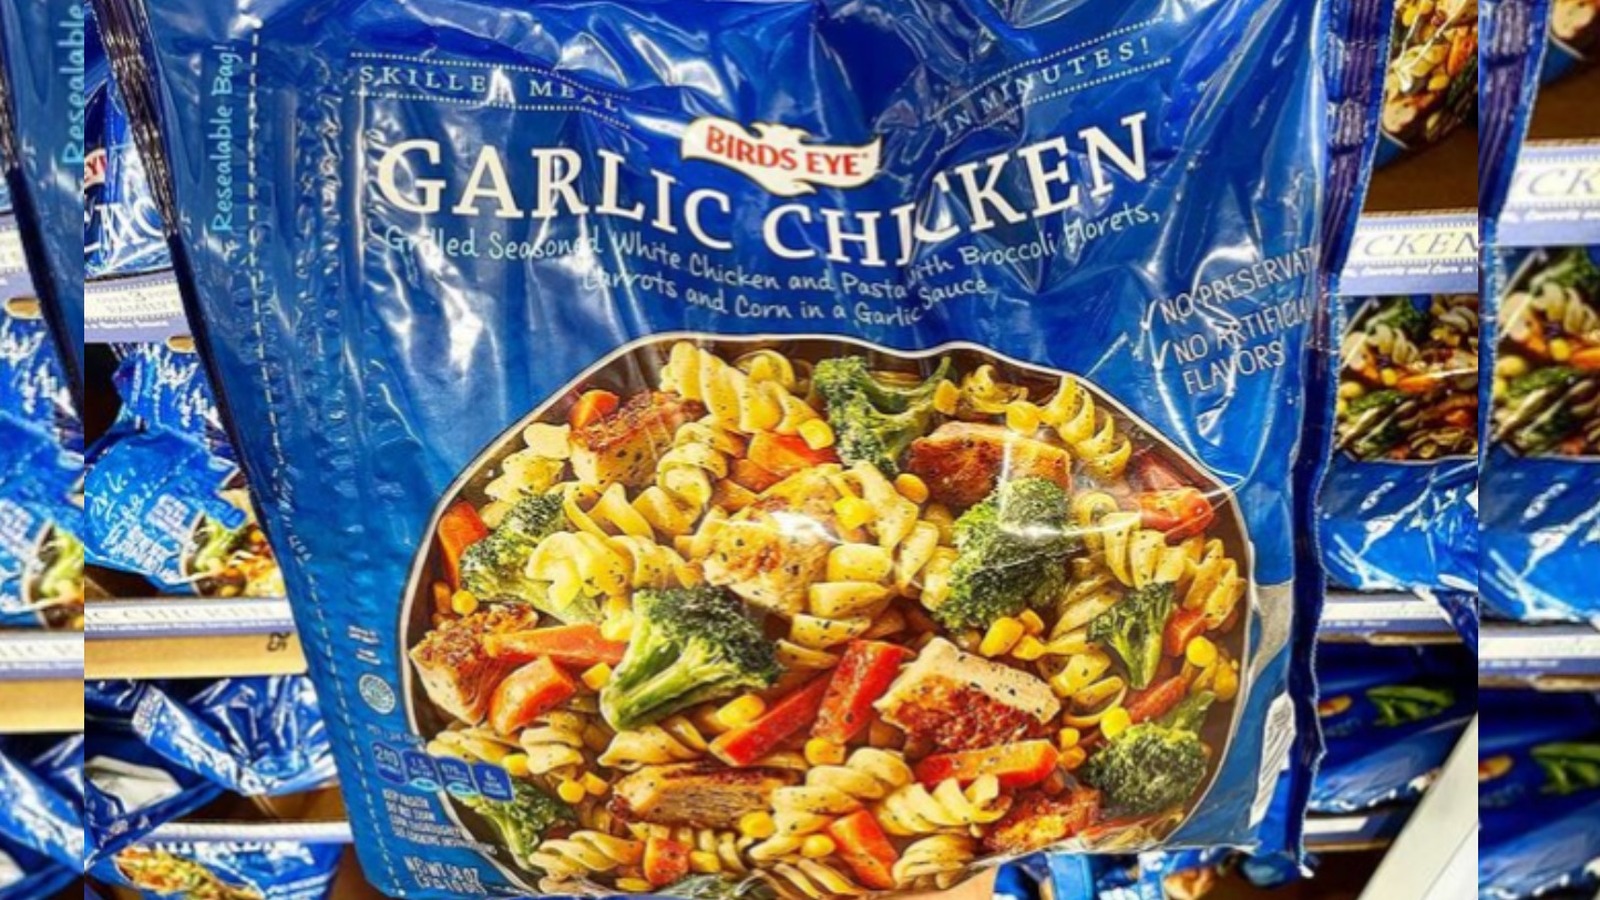 Costco's Garlic Chicken Skillet Meals Make Dinner A Snap